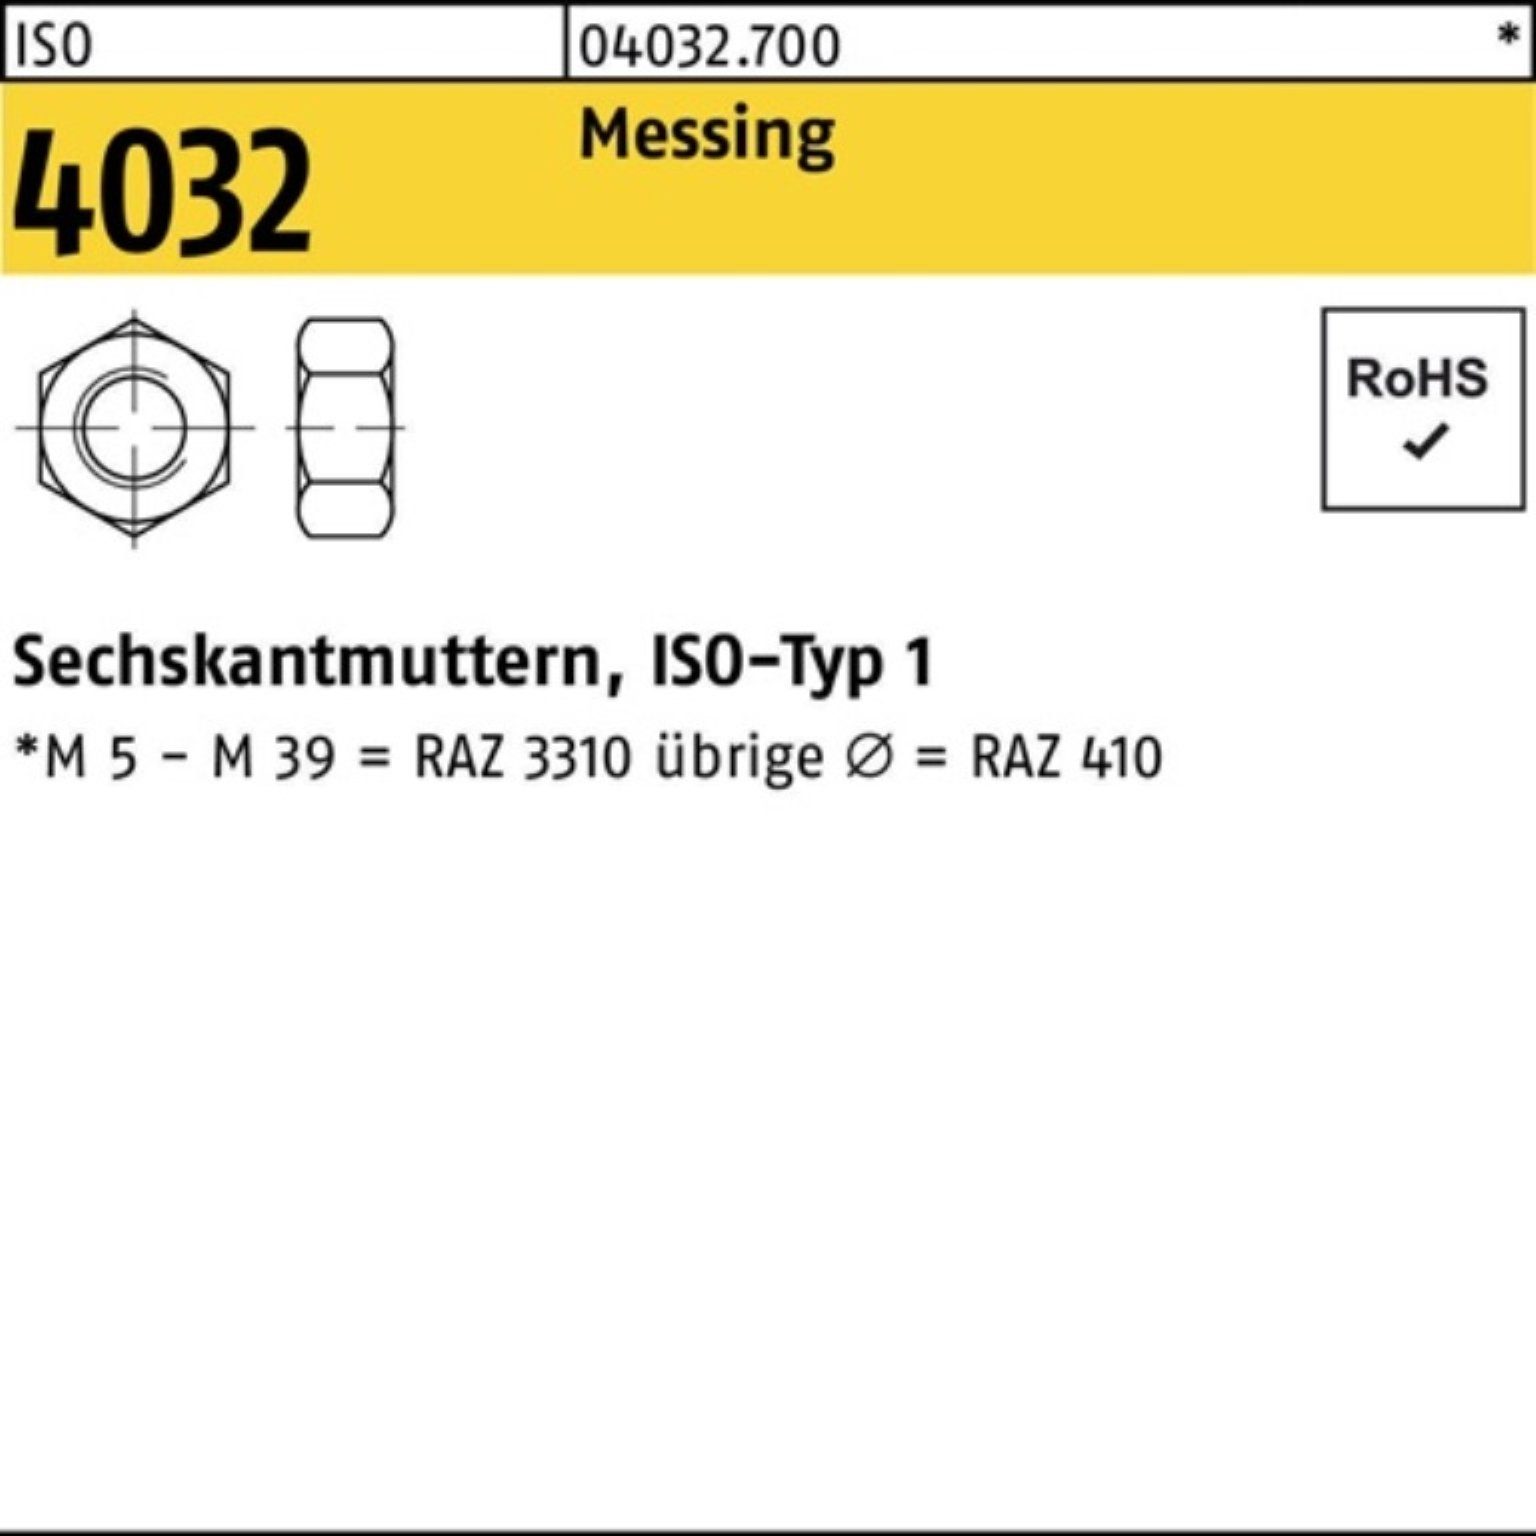 Bufab Muttern M36 5 ISO ISO Mess Pack Messing 4032 Sechskantmutter Stück 100er 4032